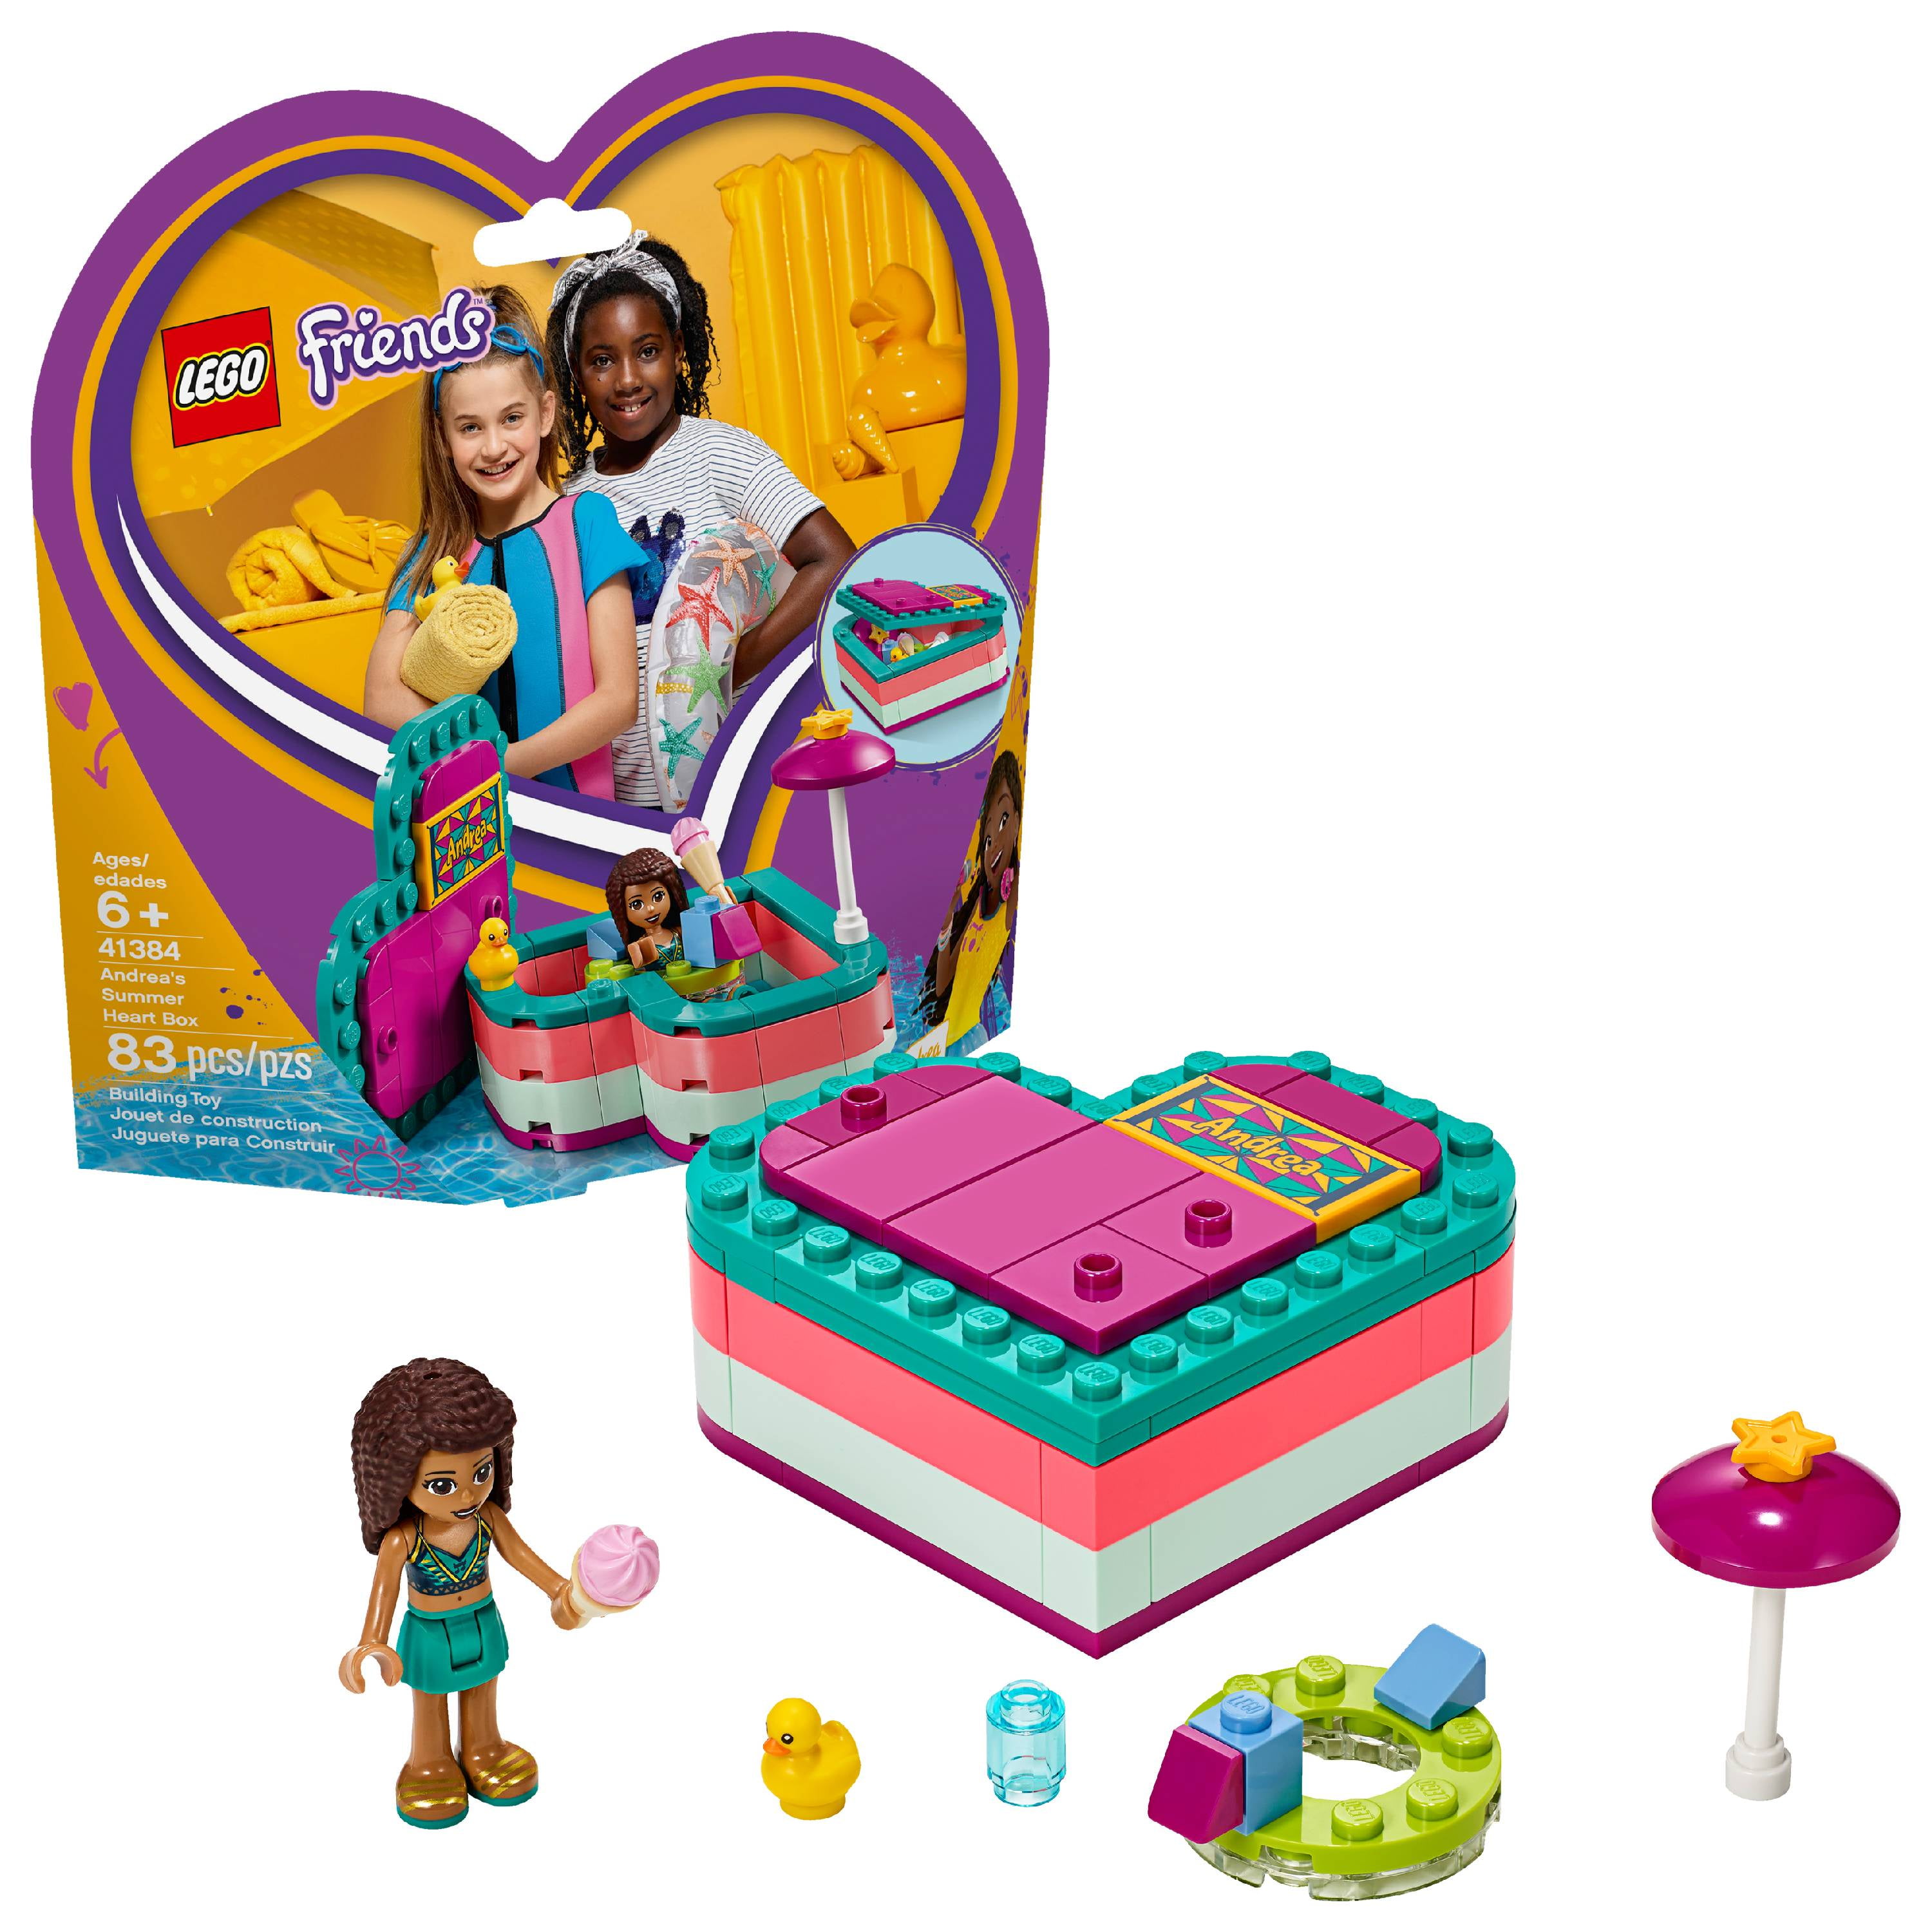 Detective Grote waanidee Hoes LEGO Friends Andrea's Summer Heart Box 41384 Building Set (83 Pieces) -  Walmart.com